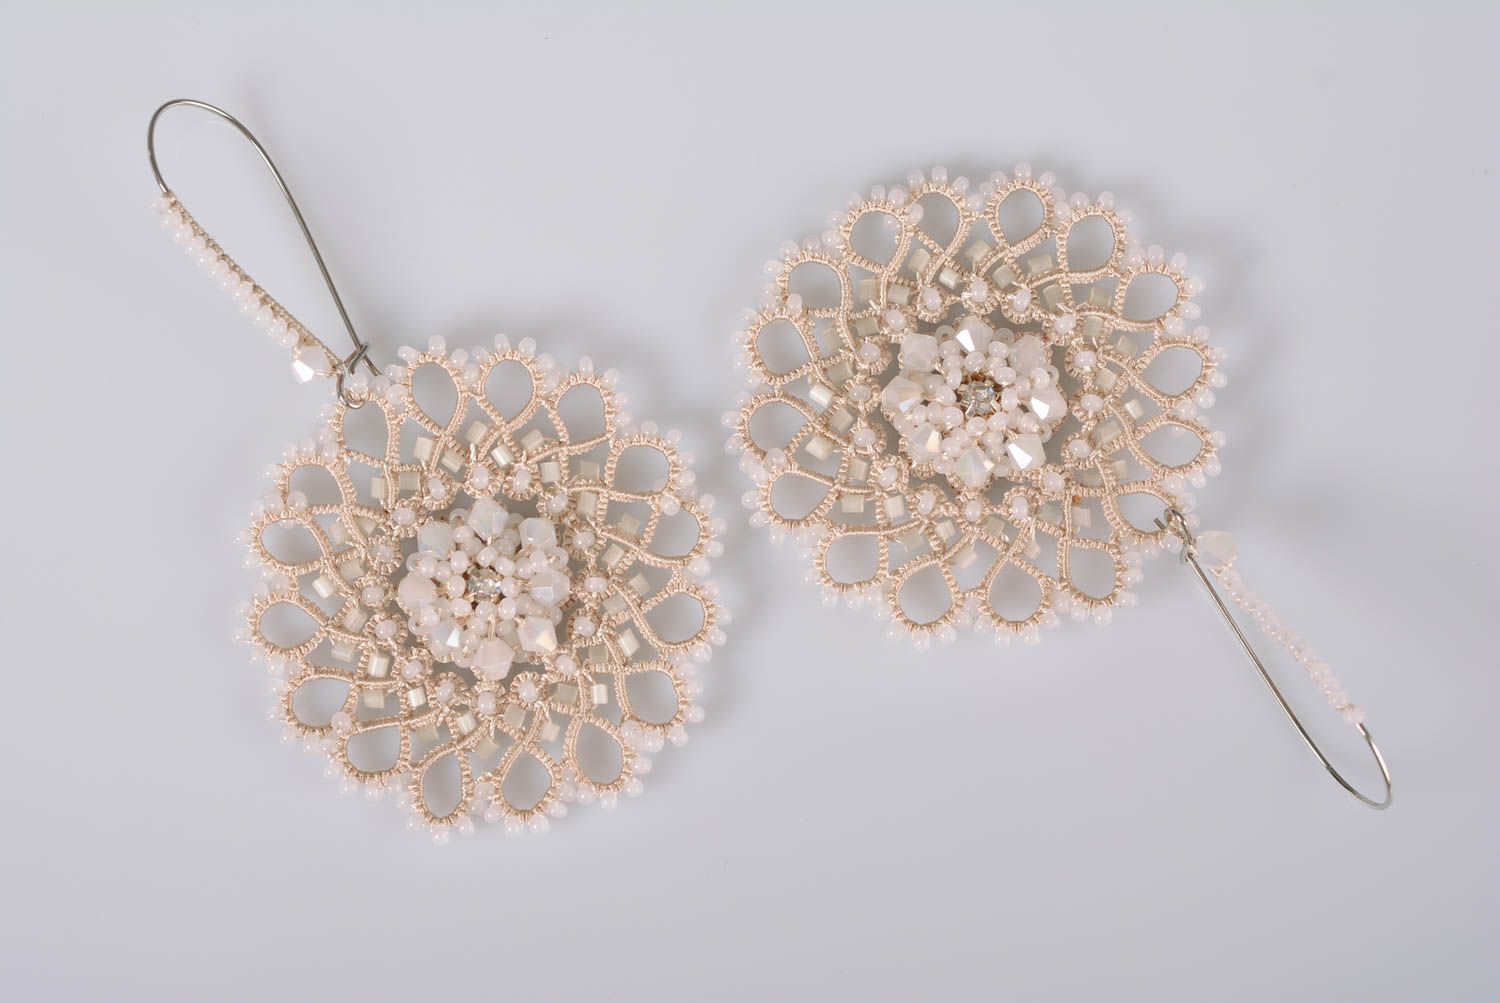 Handmade earrings fashion jewelry earrings for women designer accessories photo 1